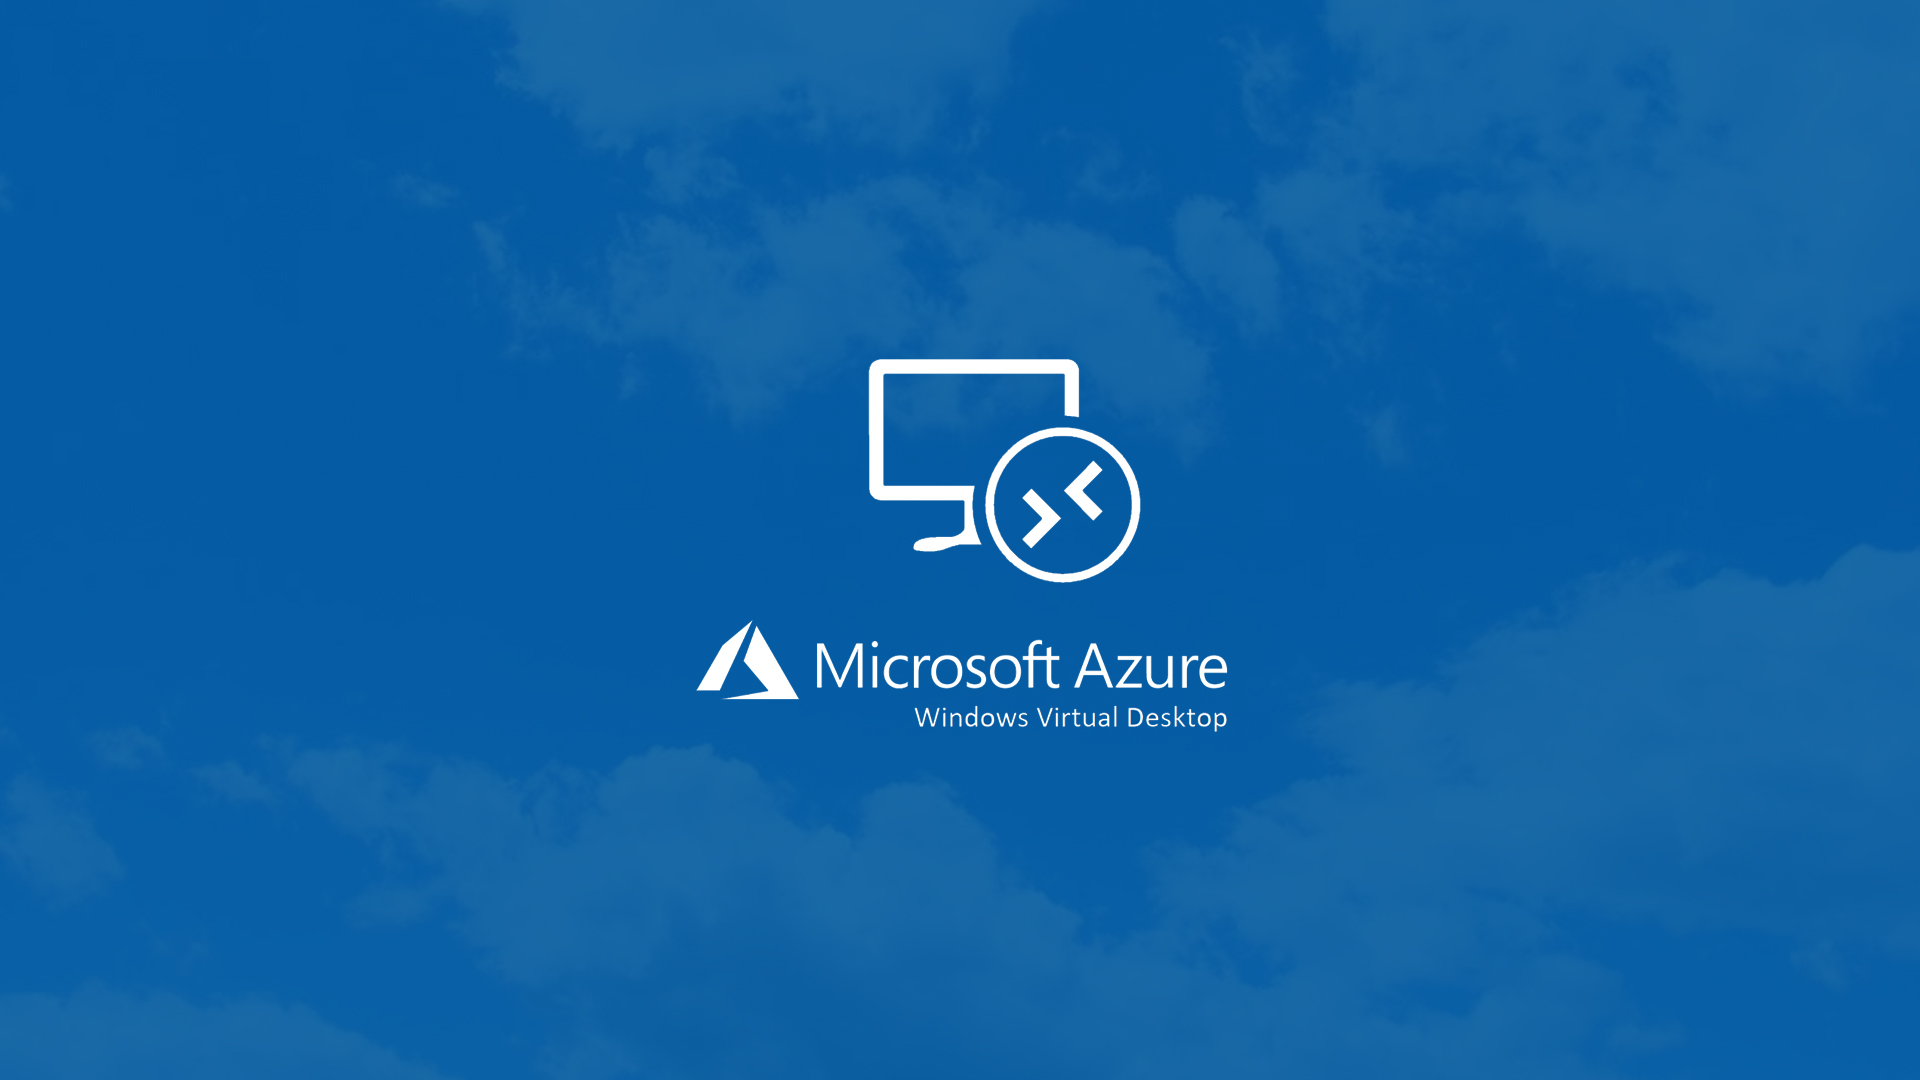 Azure Windows Virtual Desktop Benefits